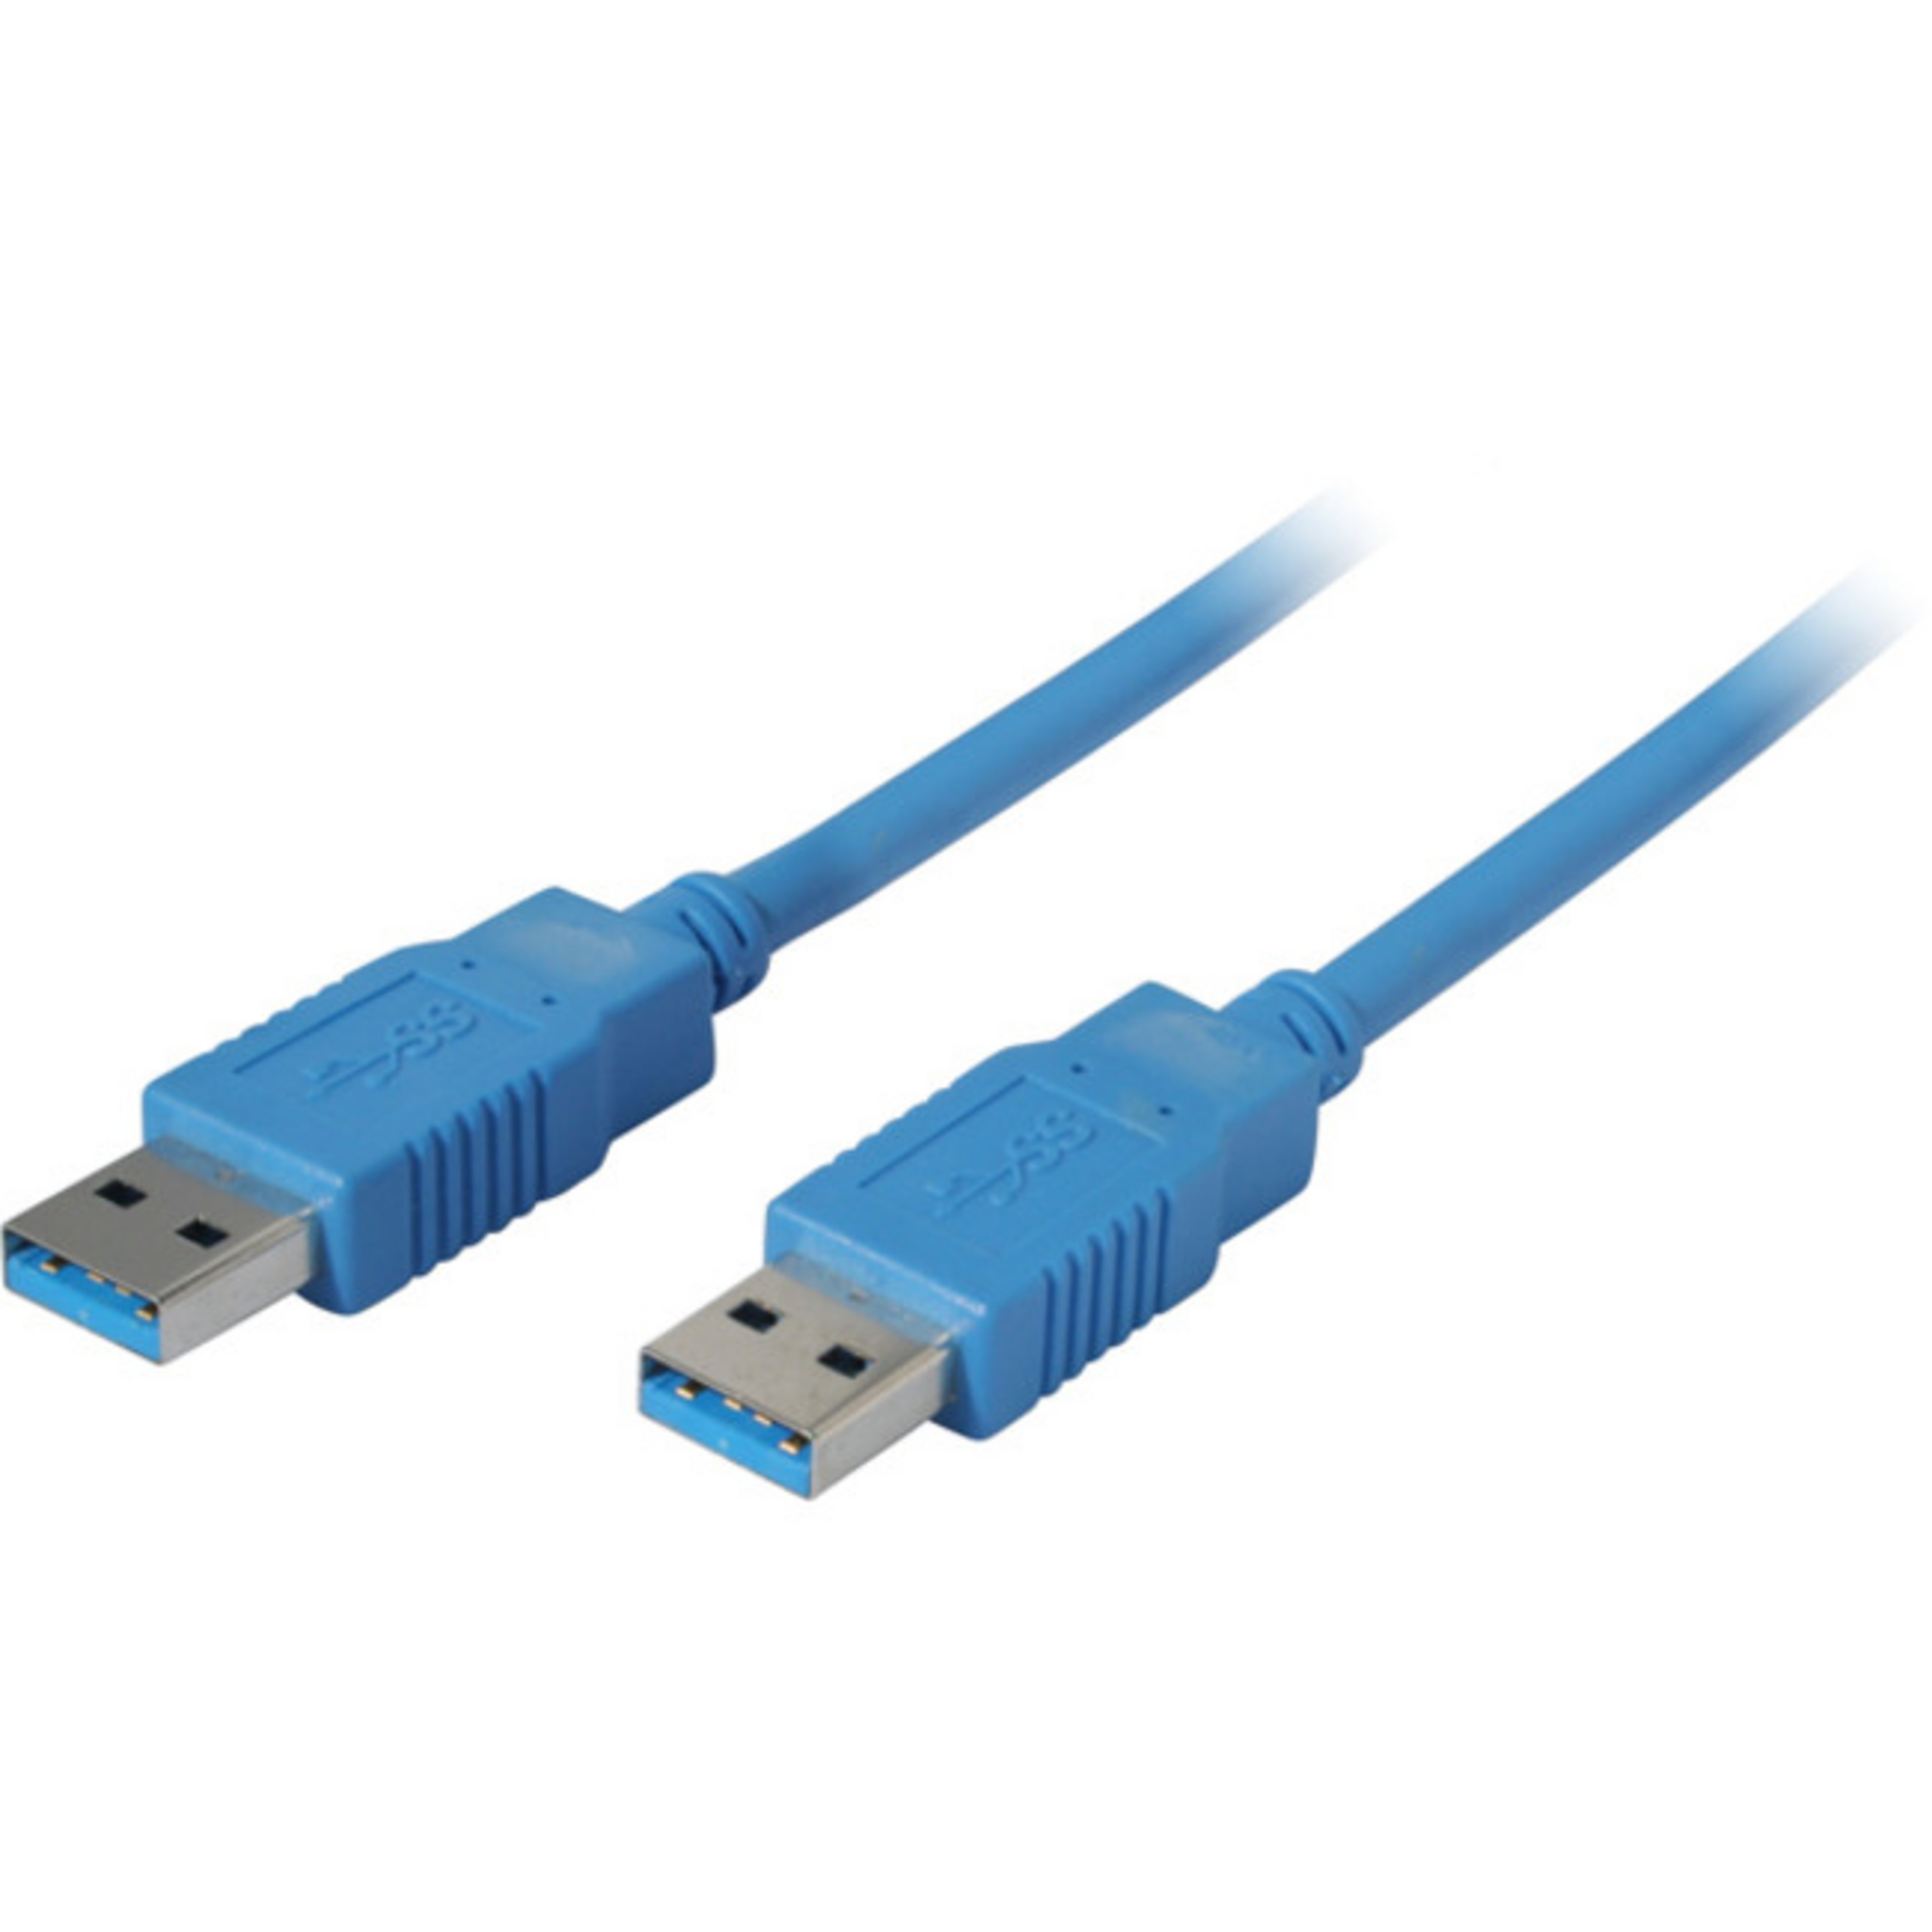 A S/CONN 1,8m / USB Stecker CONNECTIVITY MAXIMUM 3.0 USB Kabel blau A USB Stecker Kabel